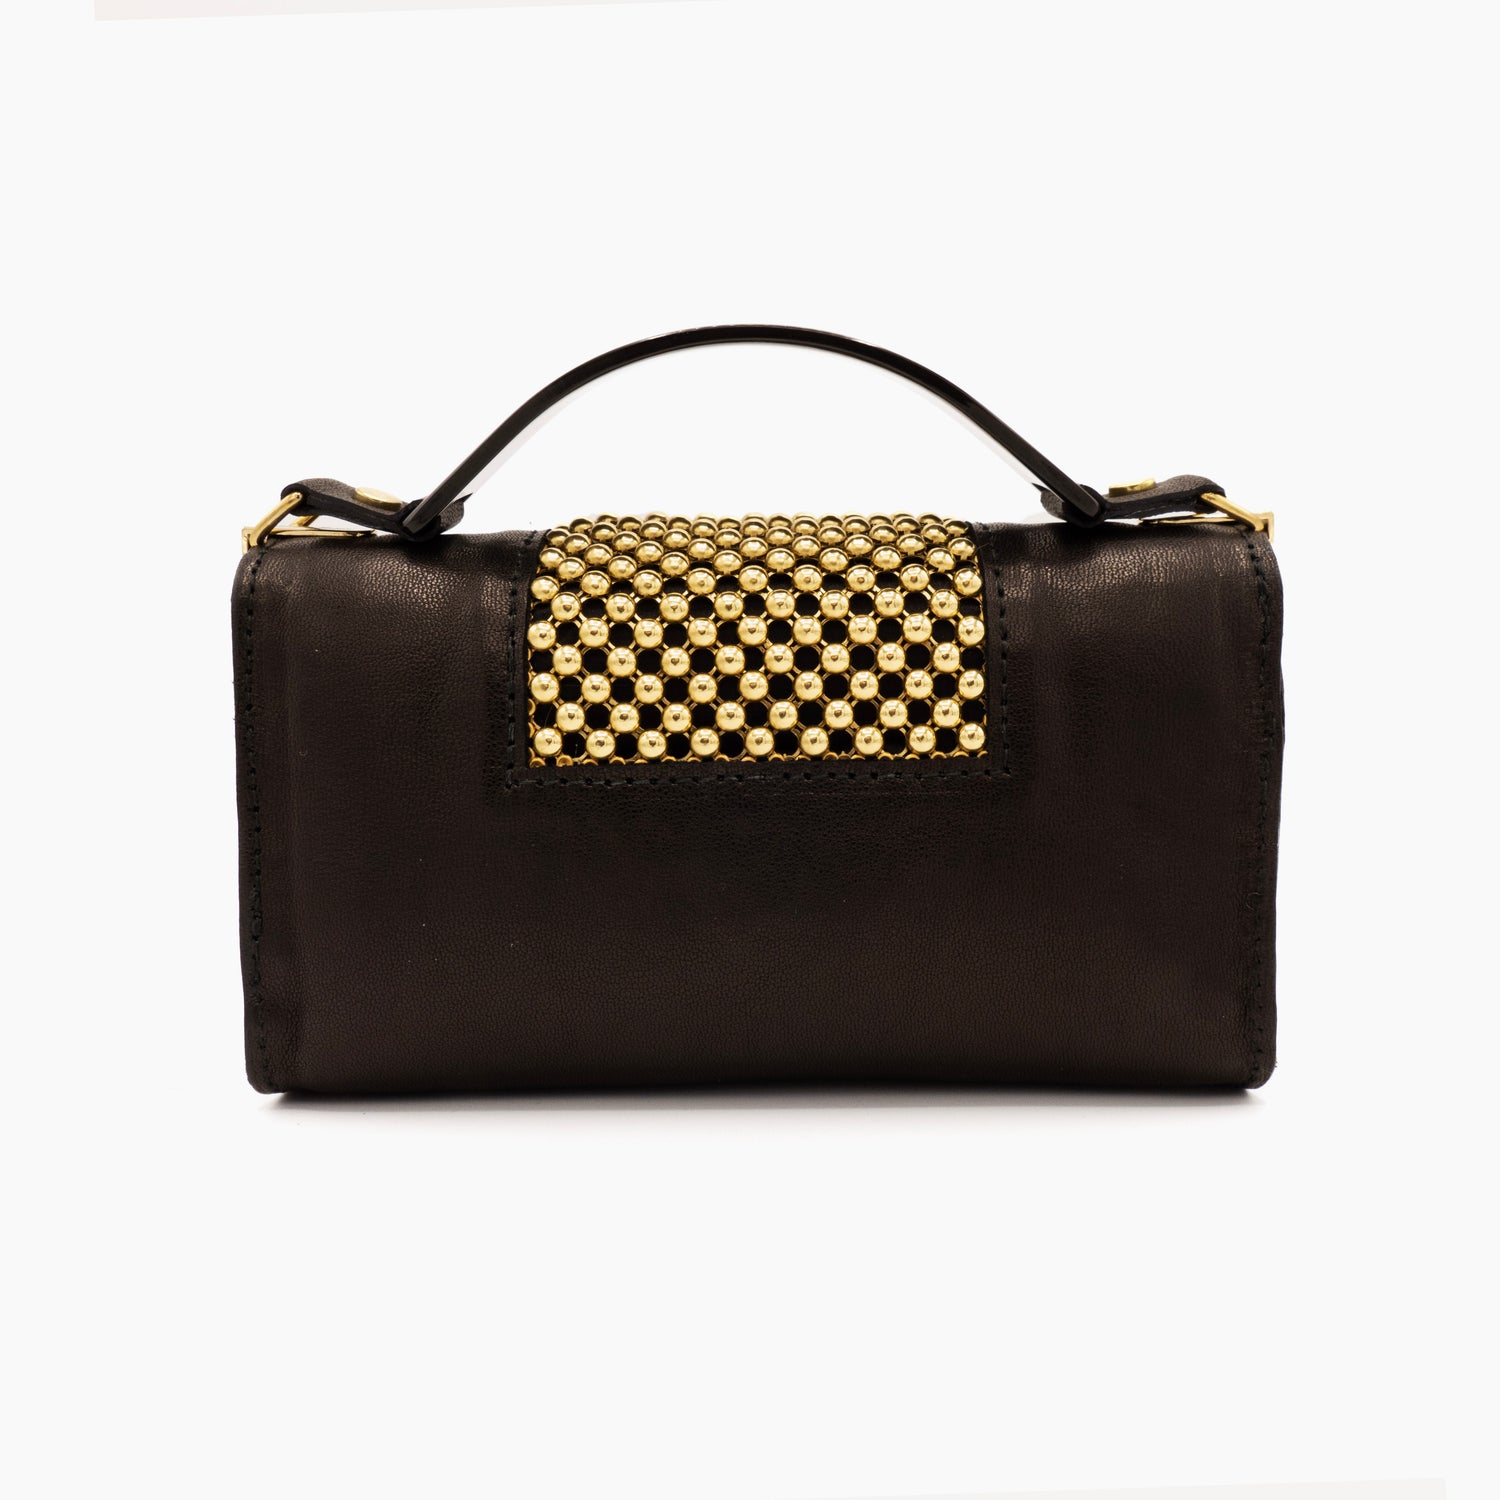 Laura B Paris Leather Handbag